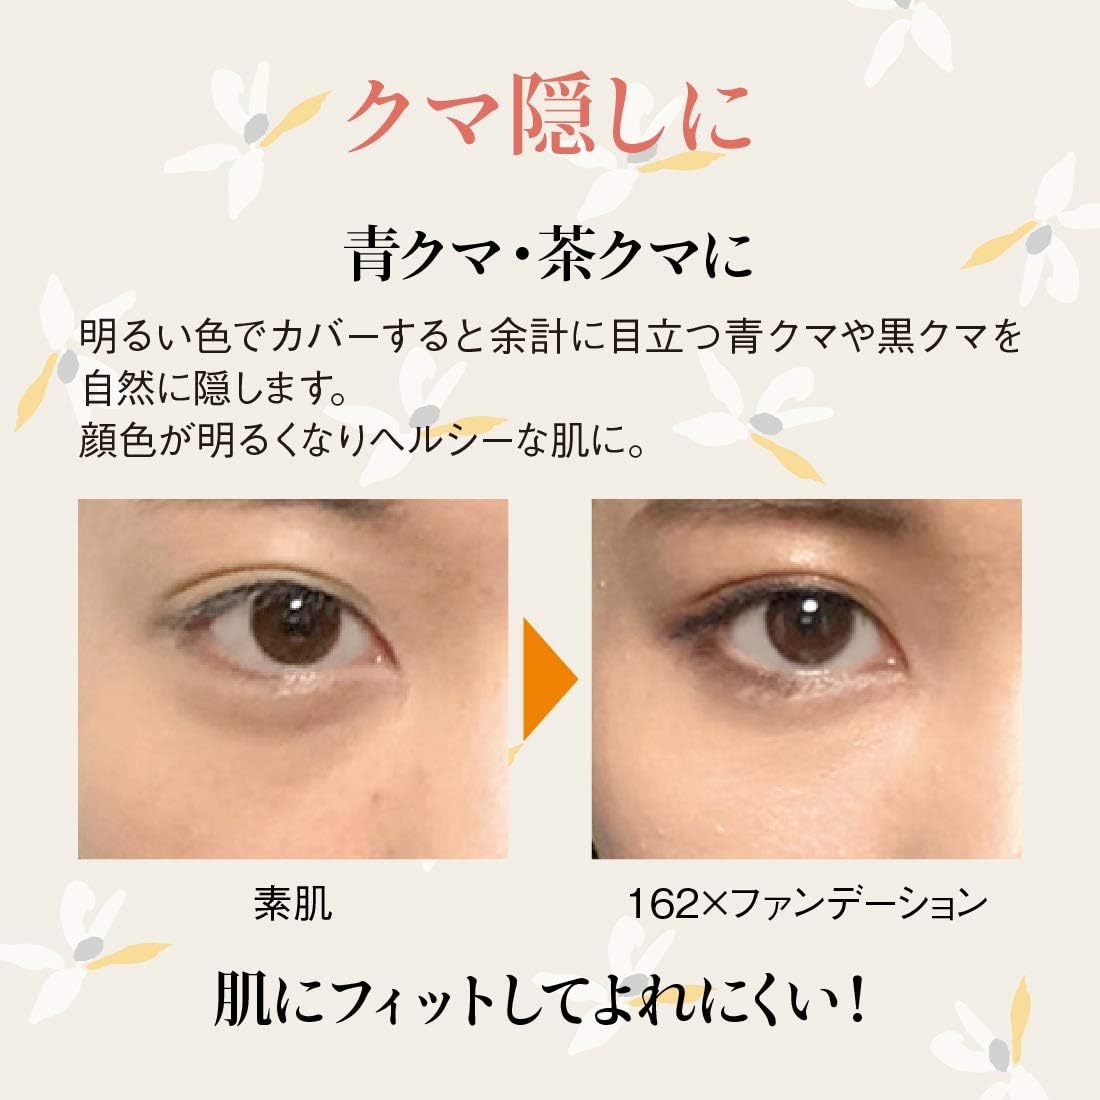 meiko- cosmetics orange concealer cover face 162 control 20g